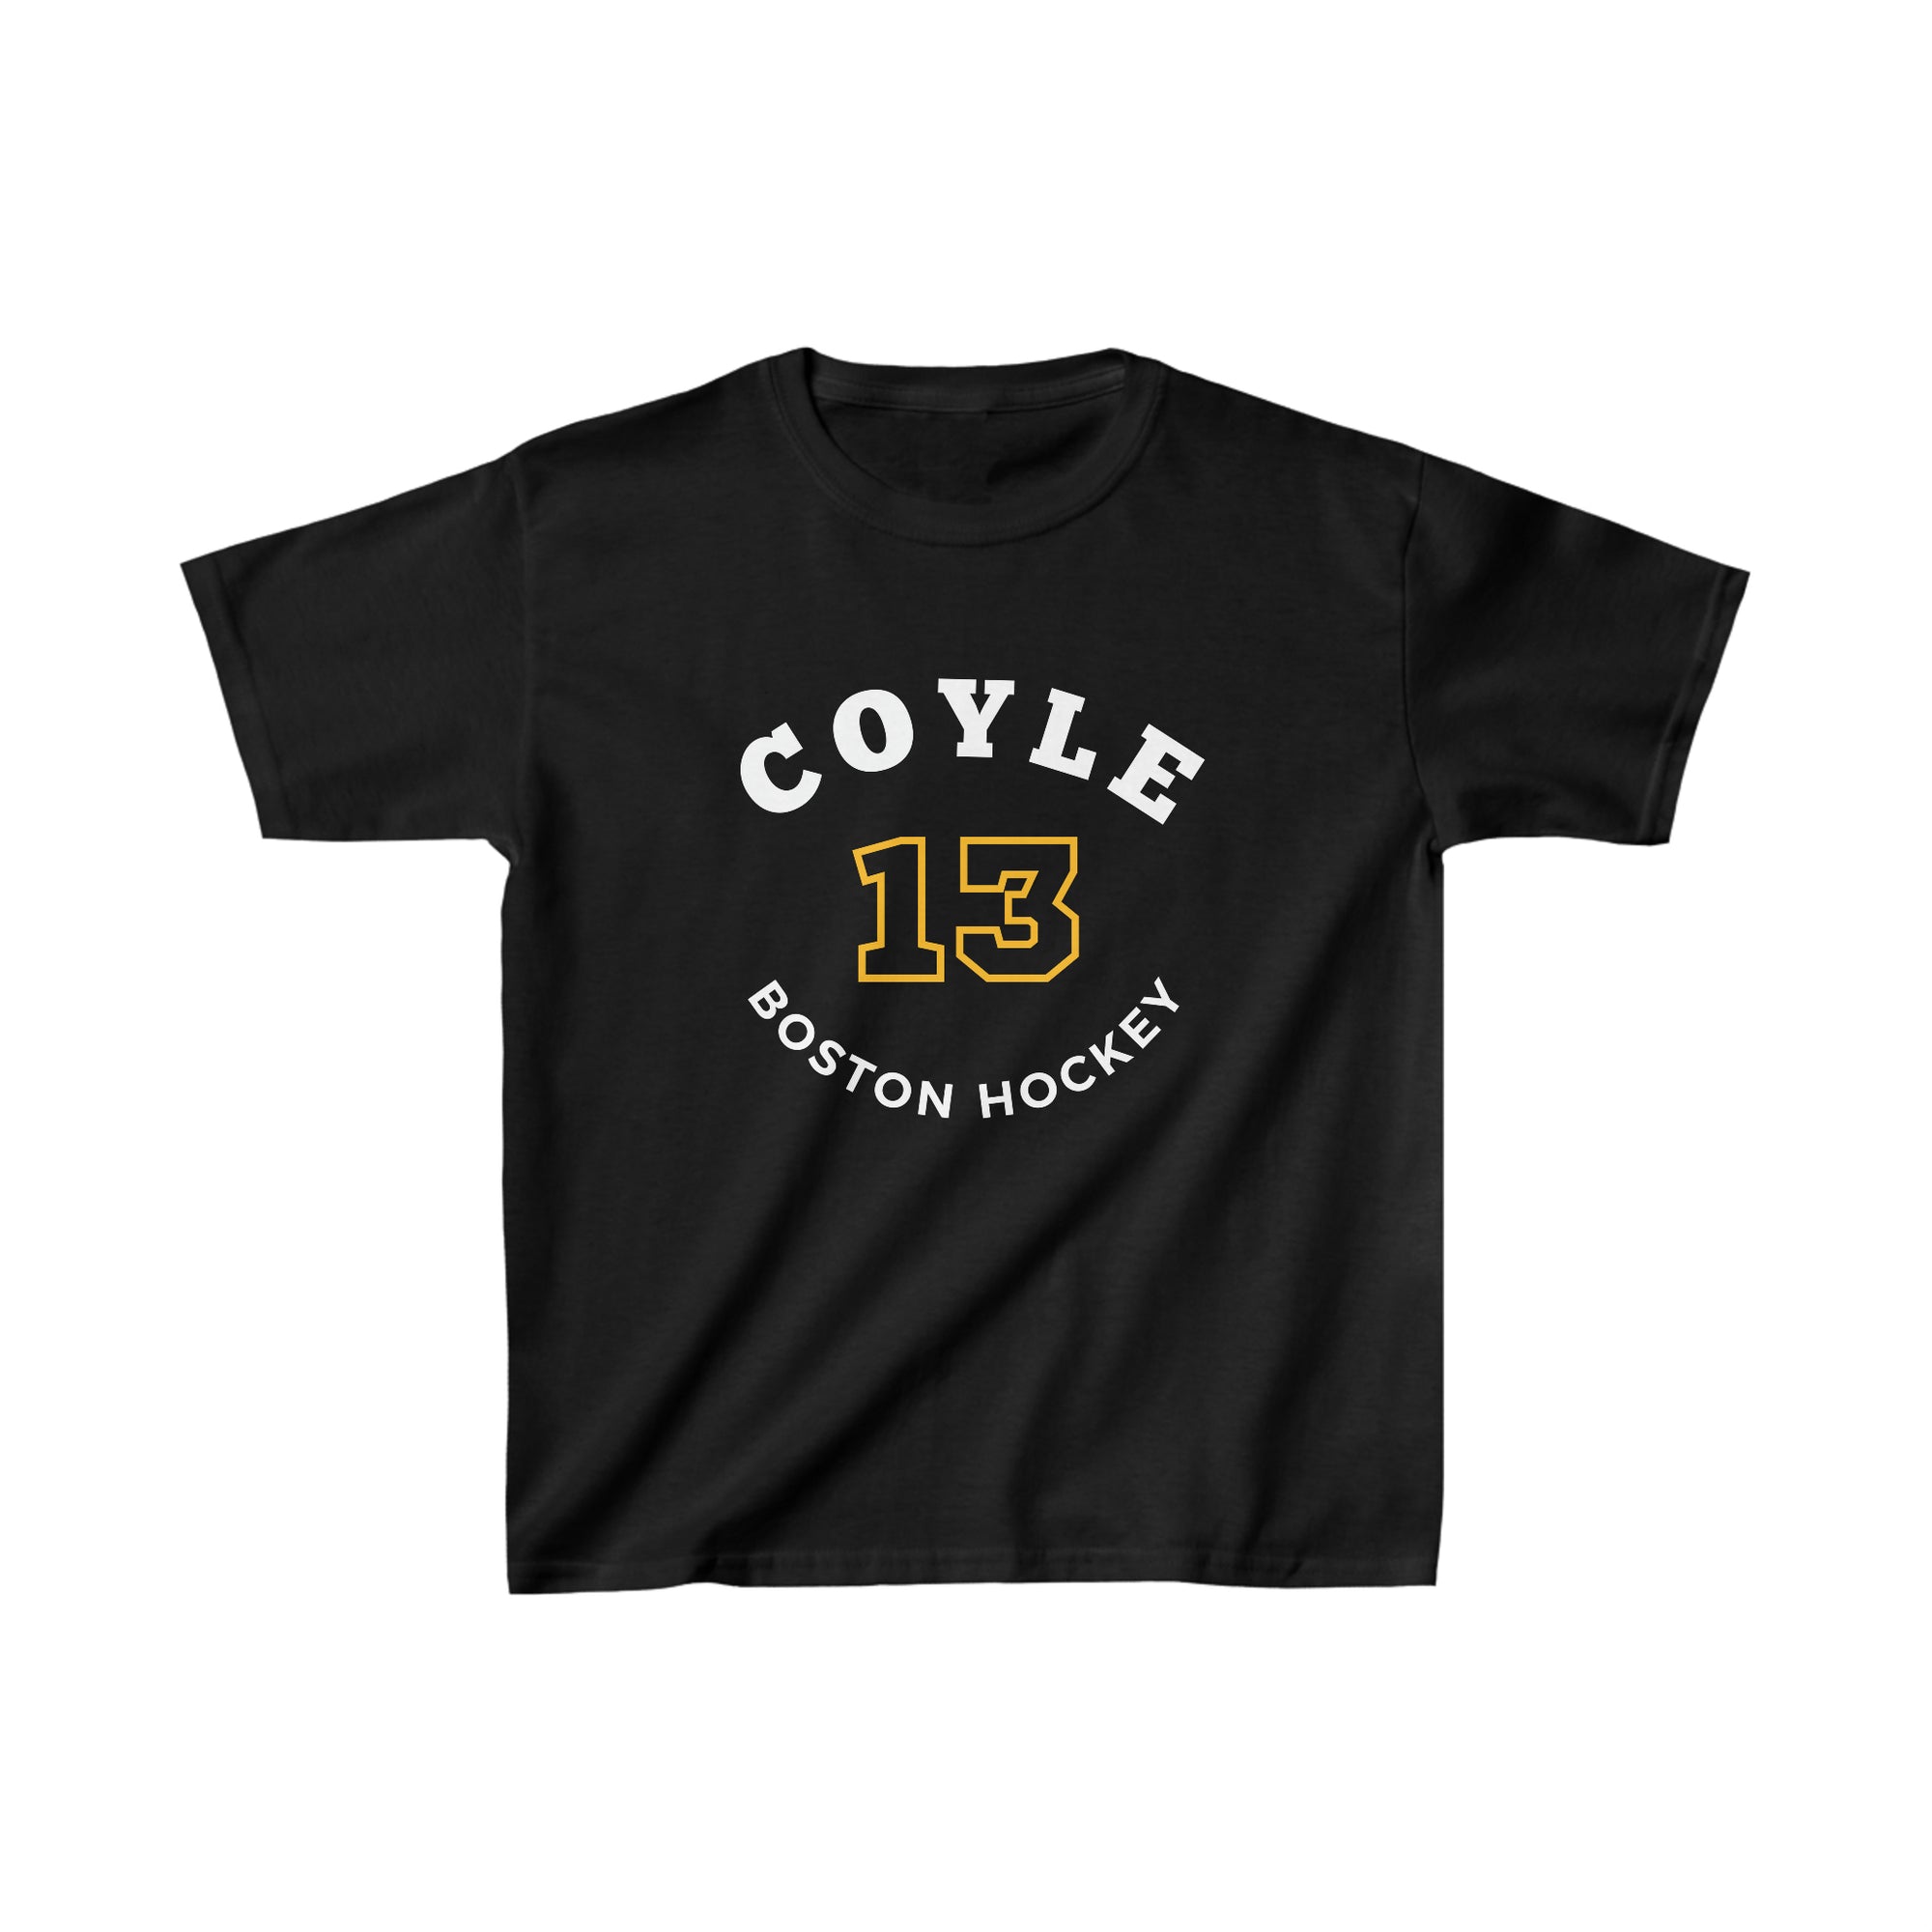 Coyle 13 Boston Hockey Number Arch Design Kids Tee